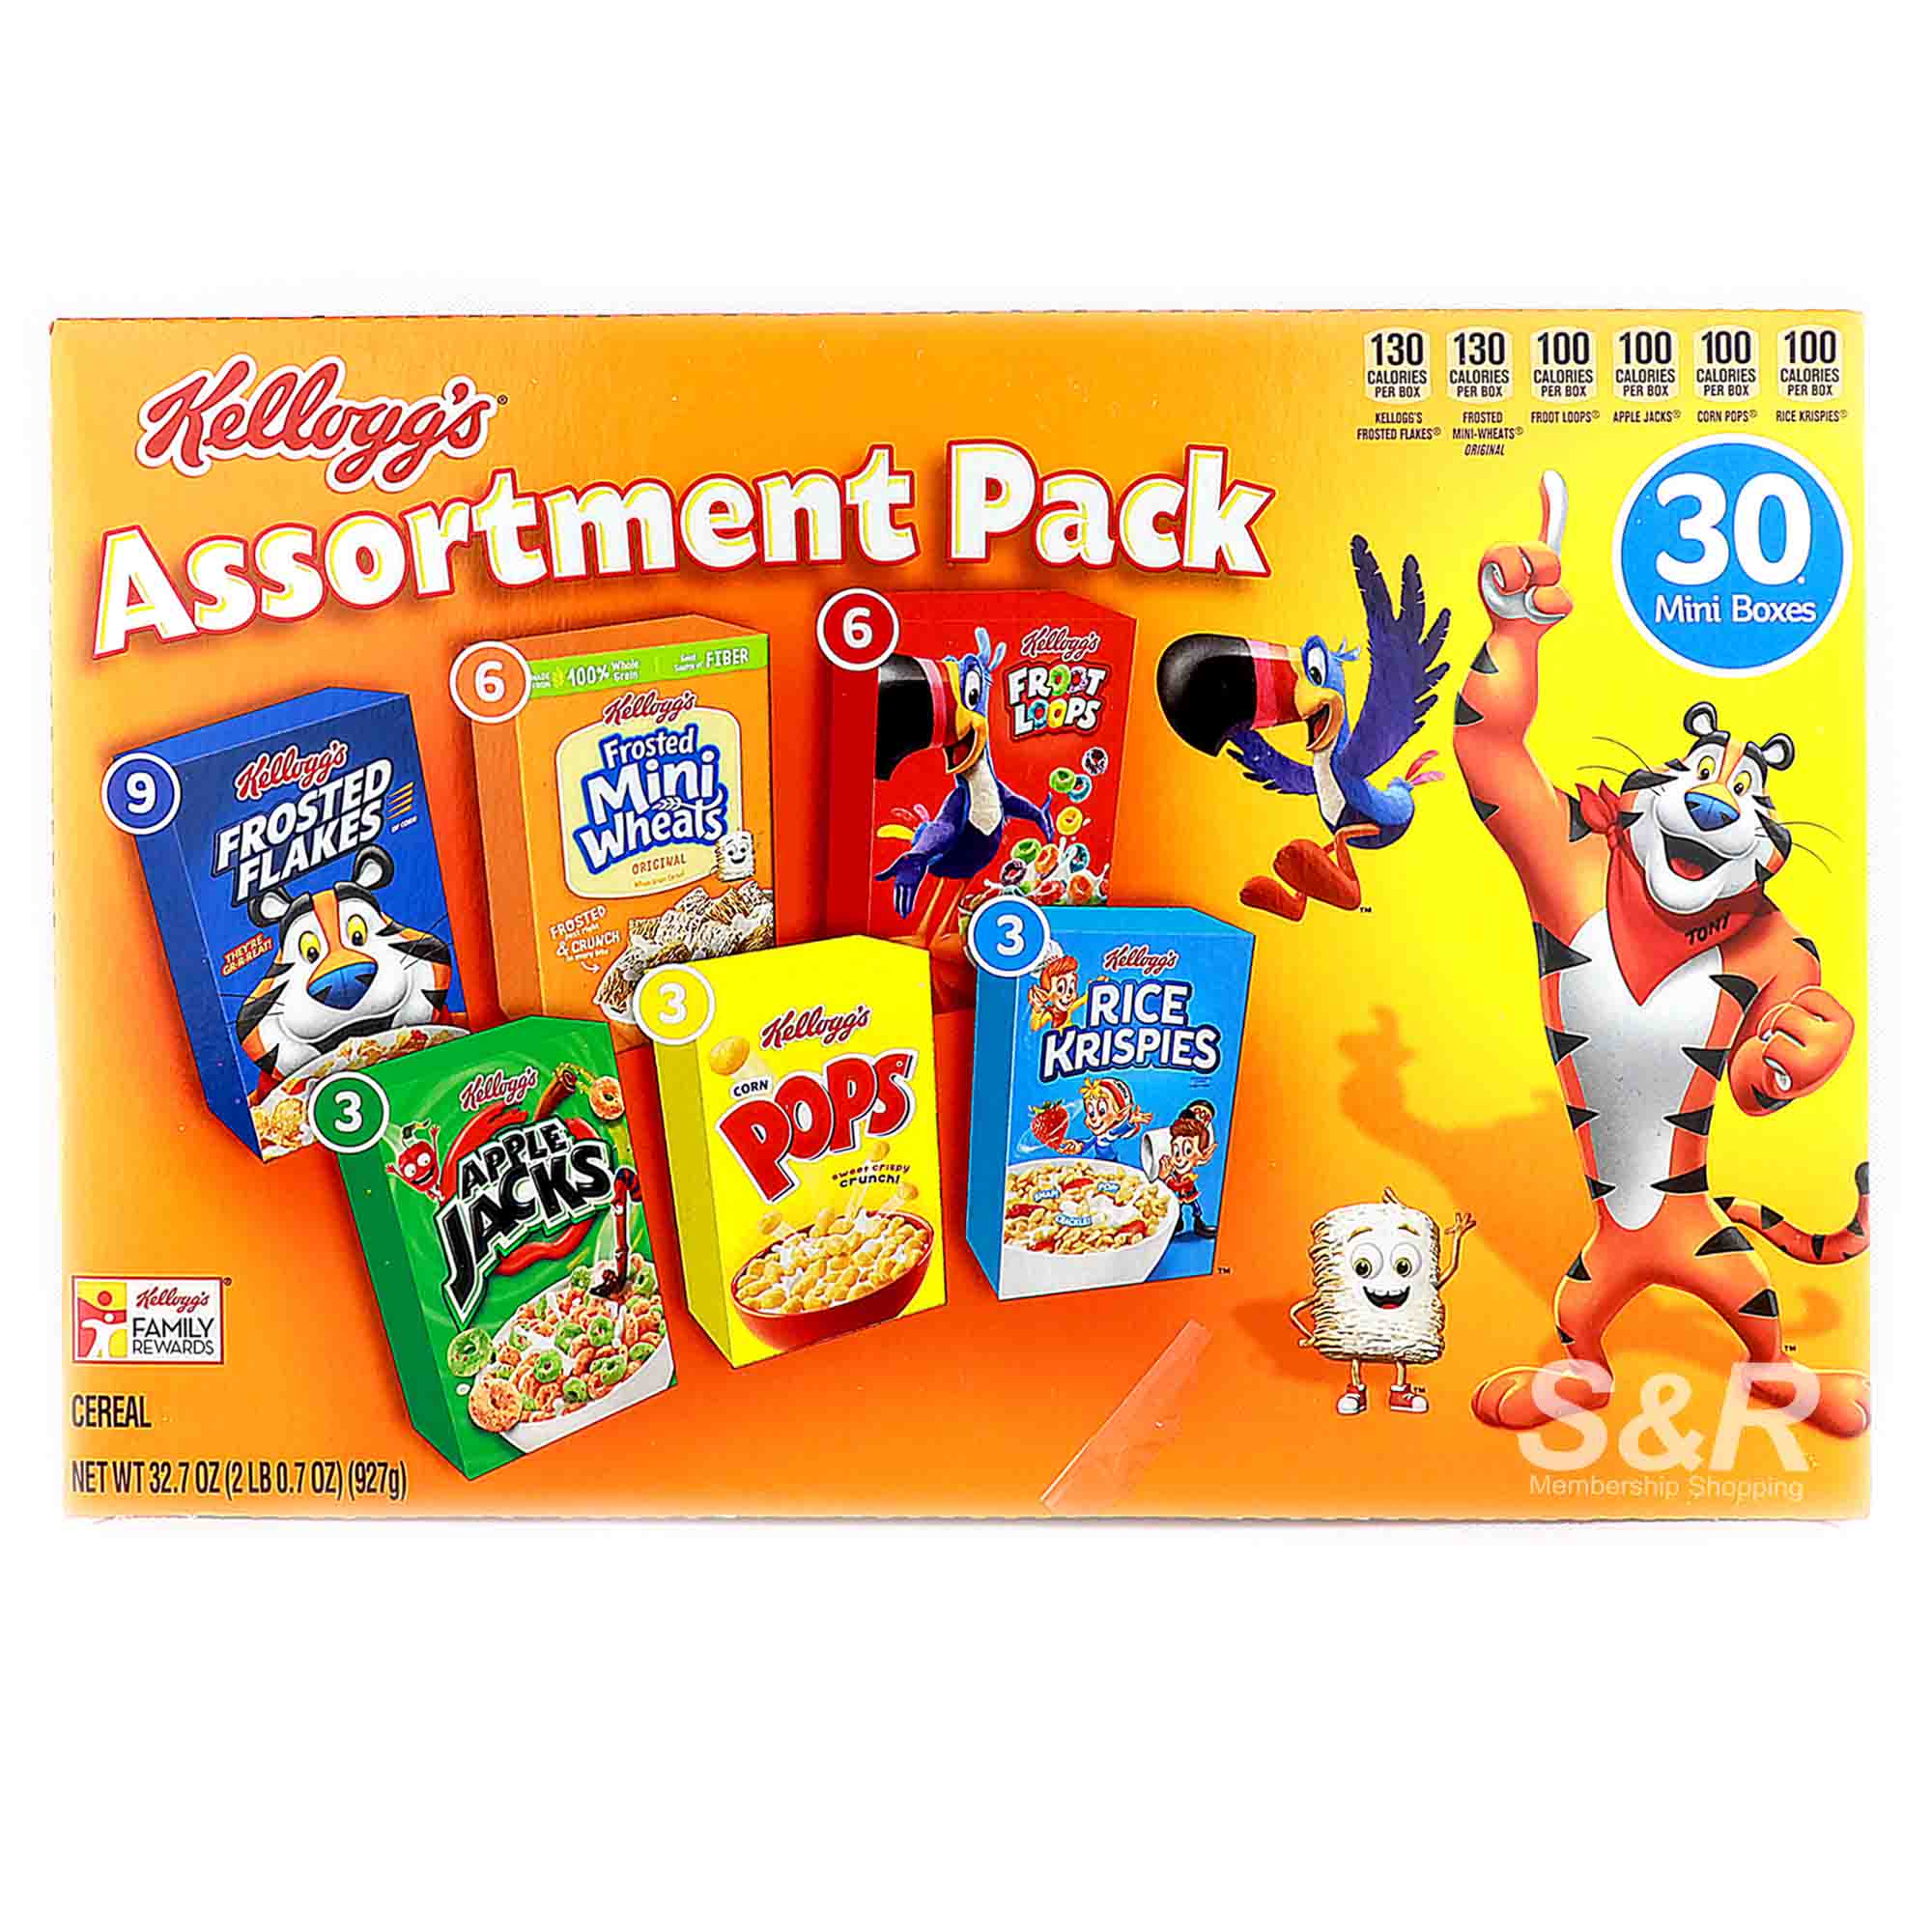 Kellogg's Assortment Pack Cereal 30 mini boxes